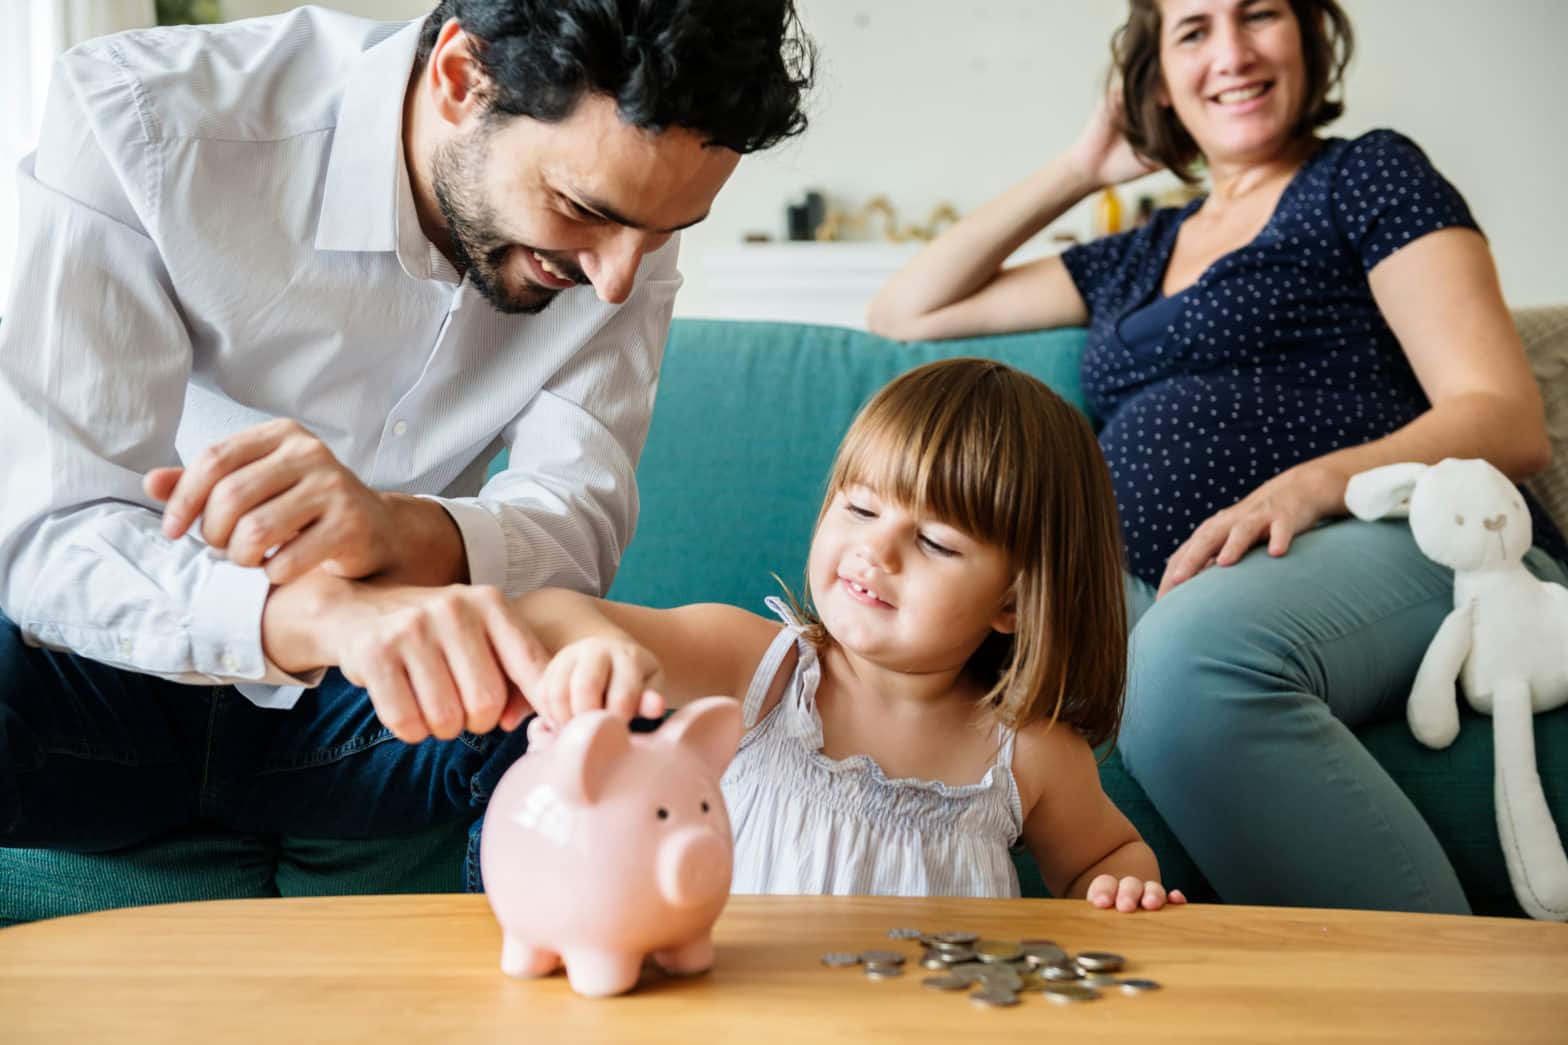 family saving money in piggy bank